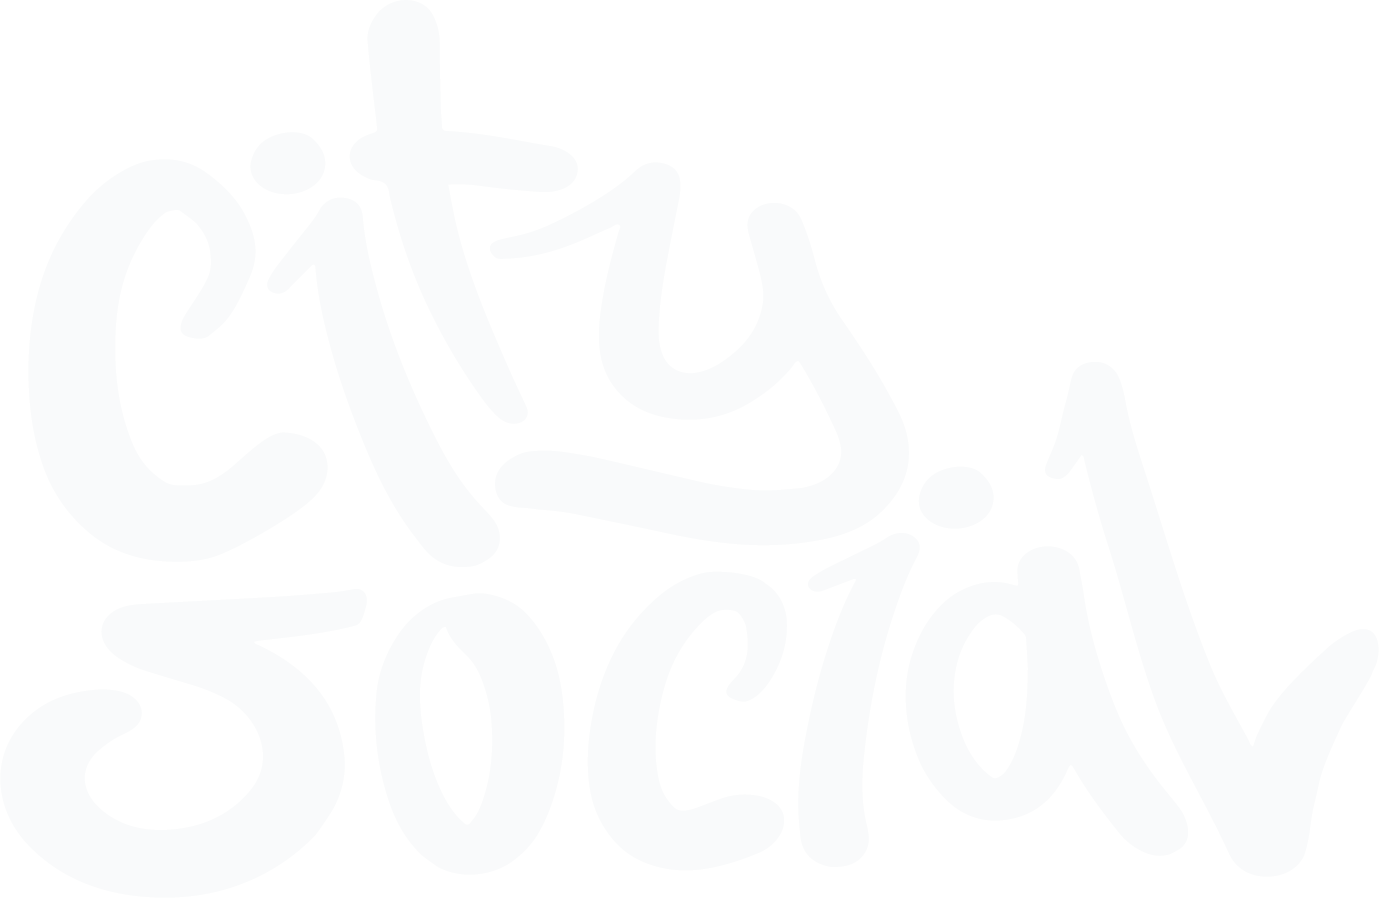 CITY SOCIAL